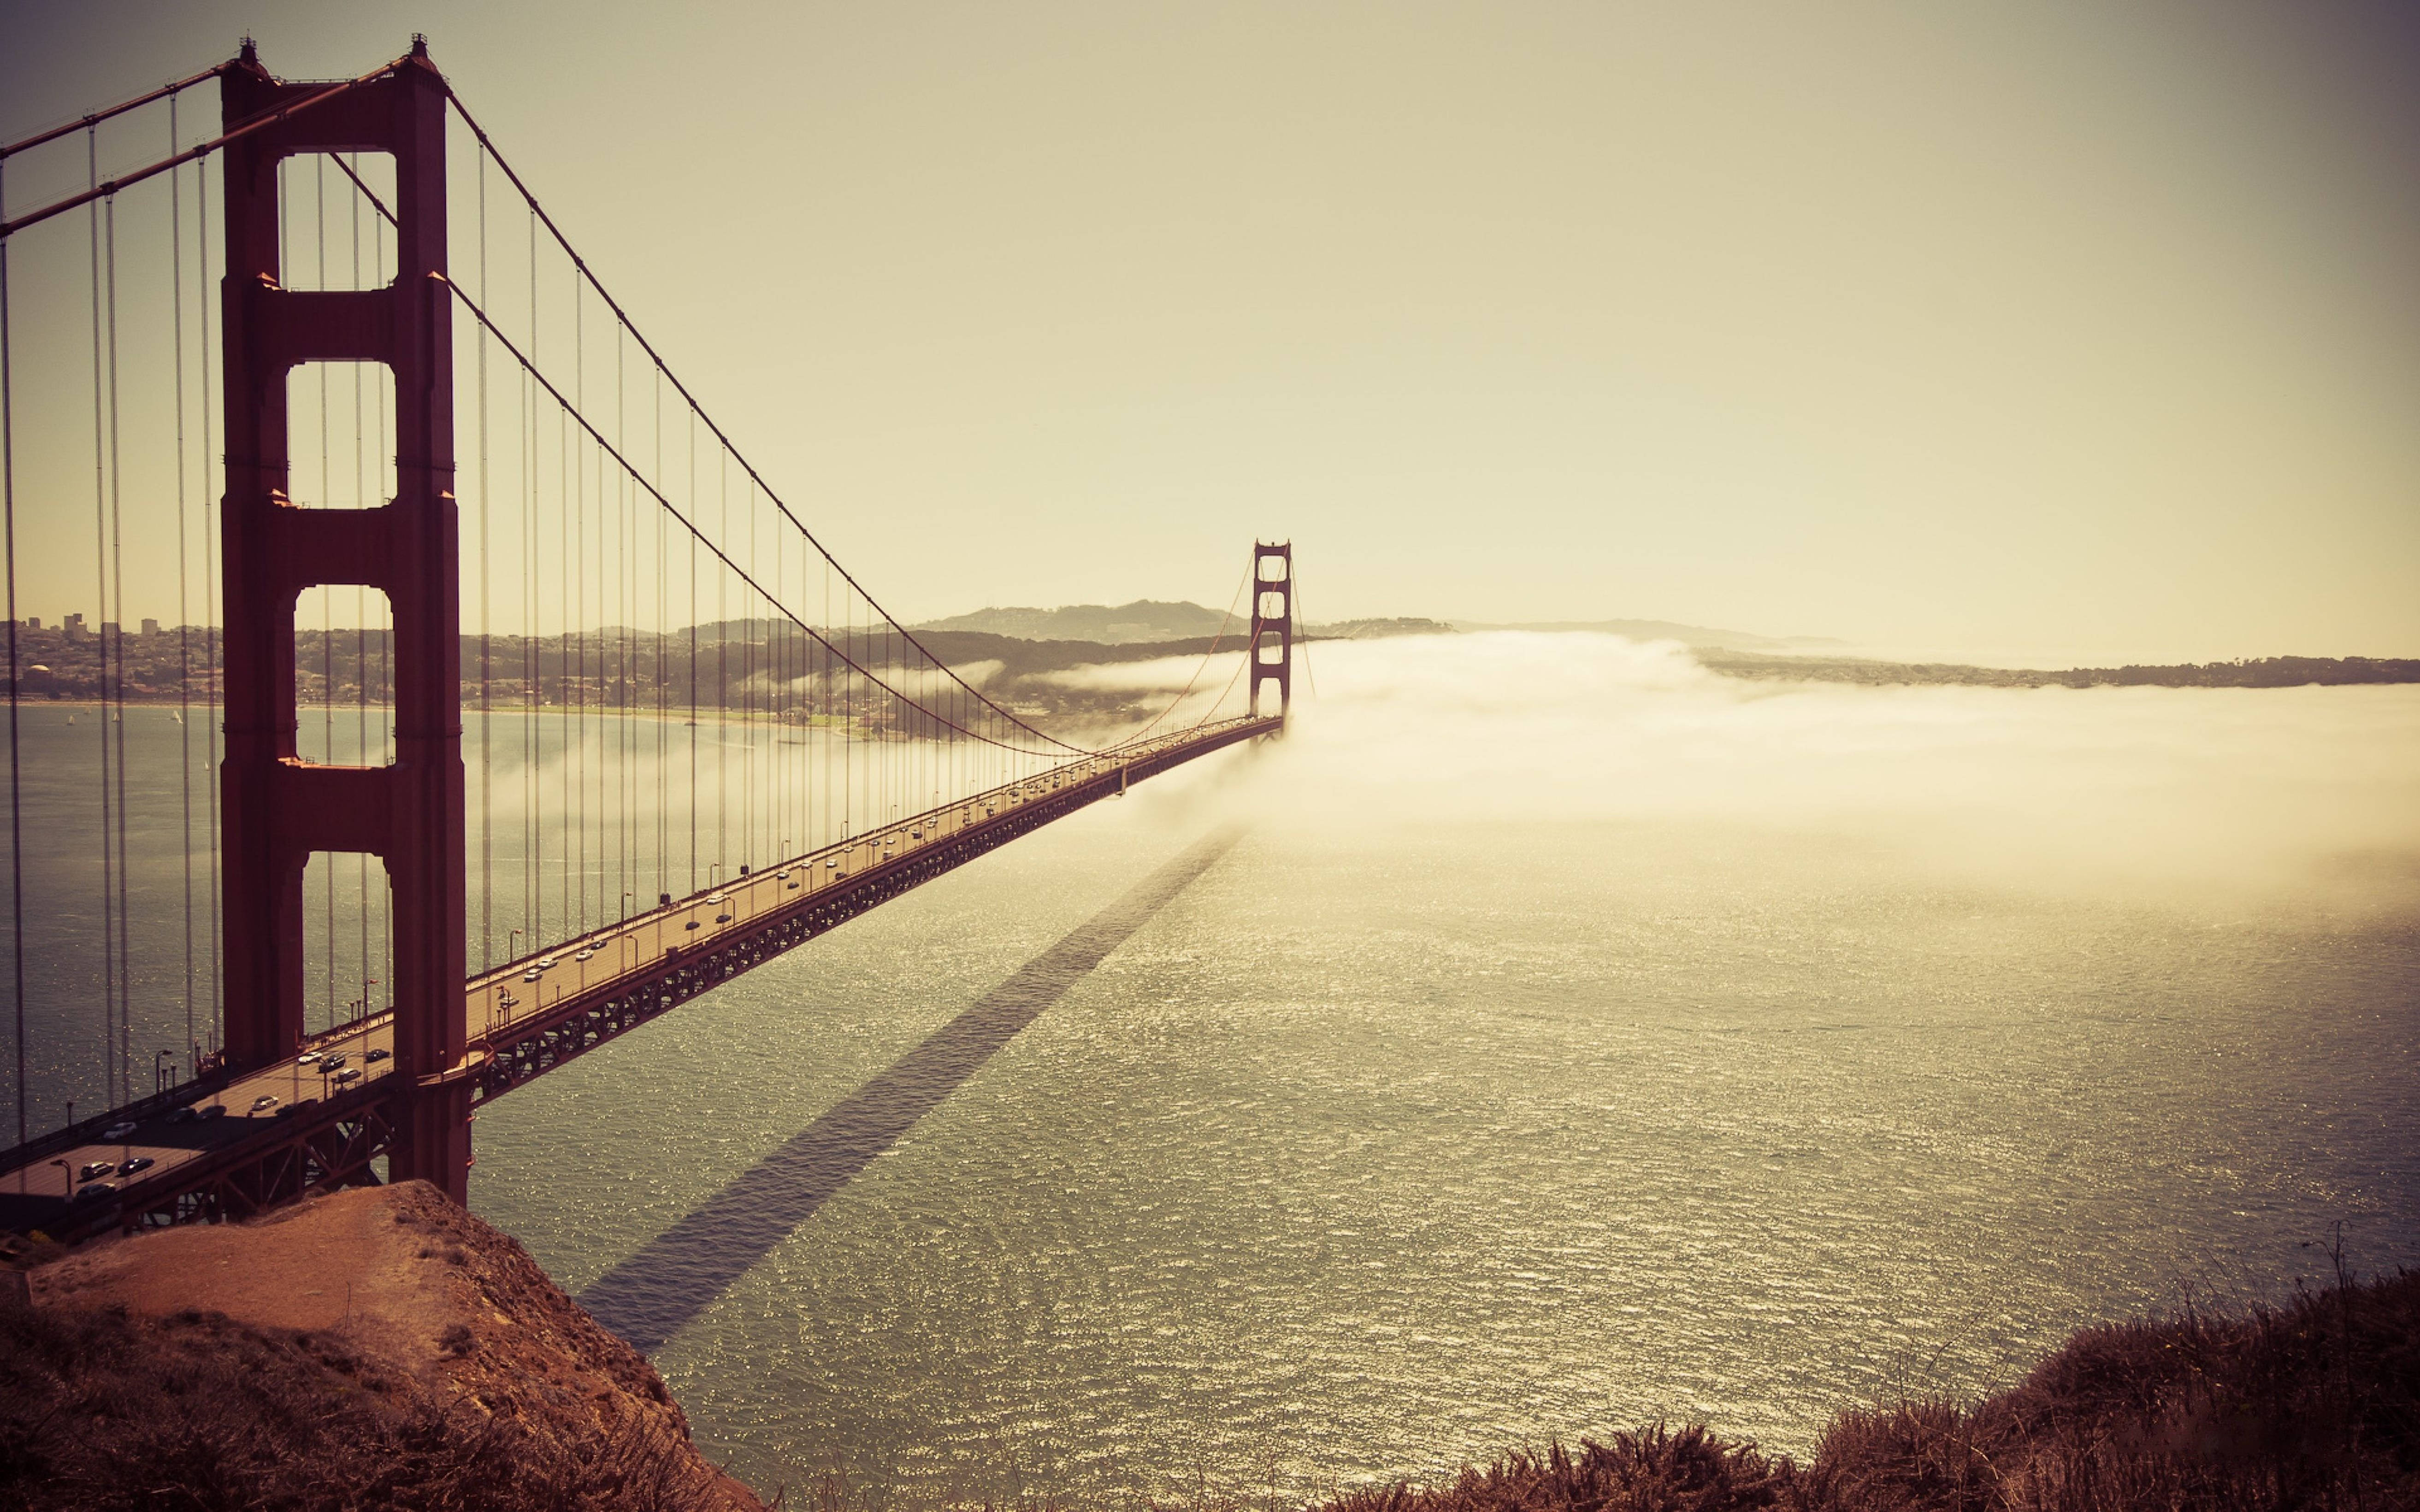 San Francisco 4k Bridge And Ocean